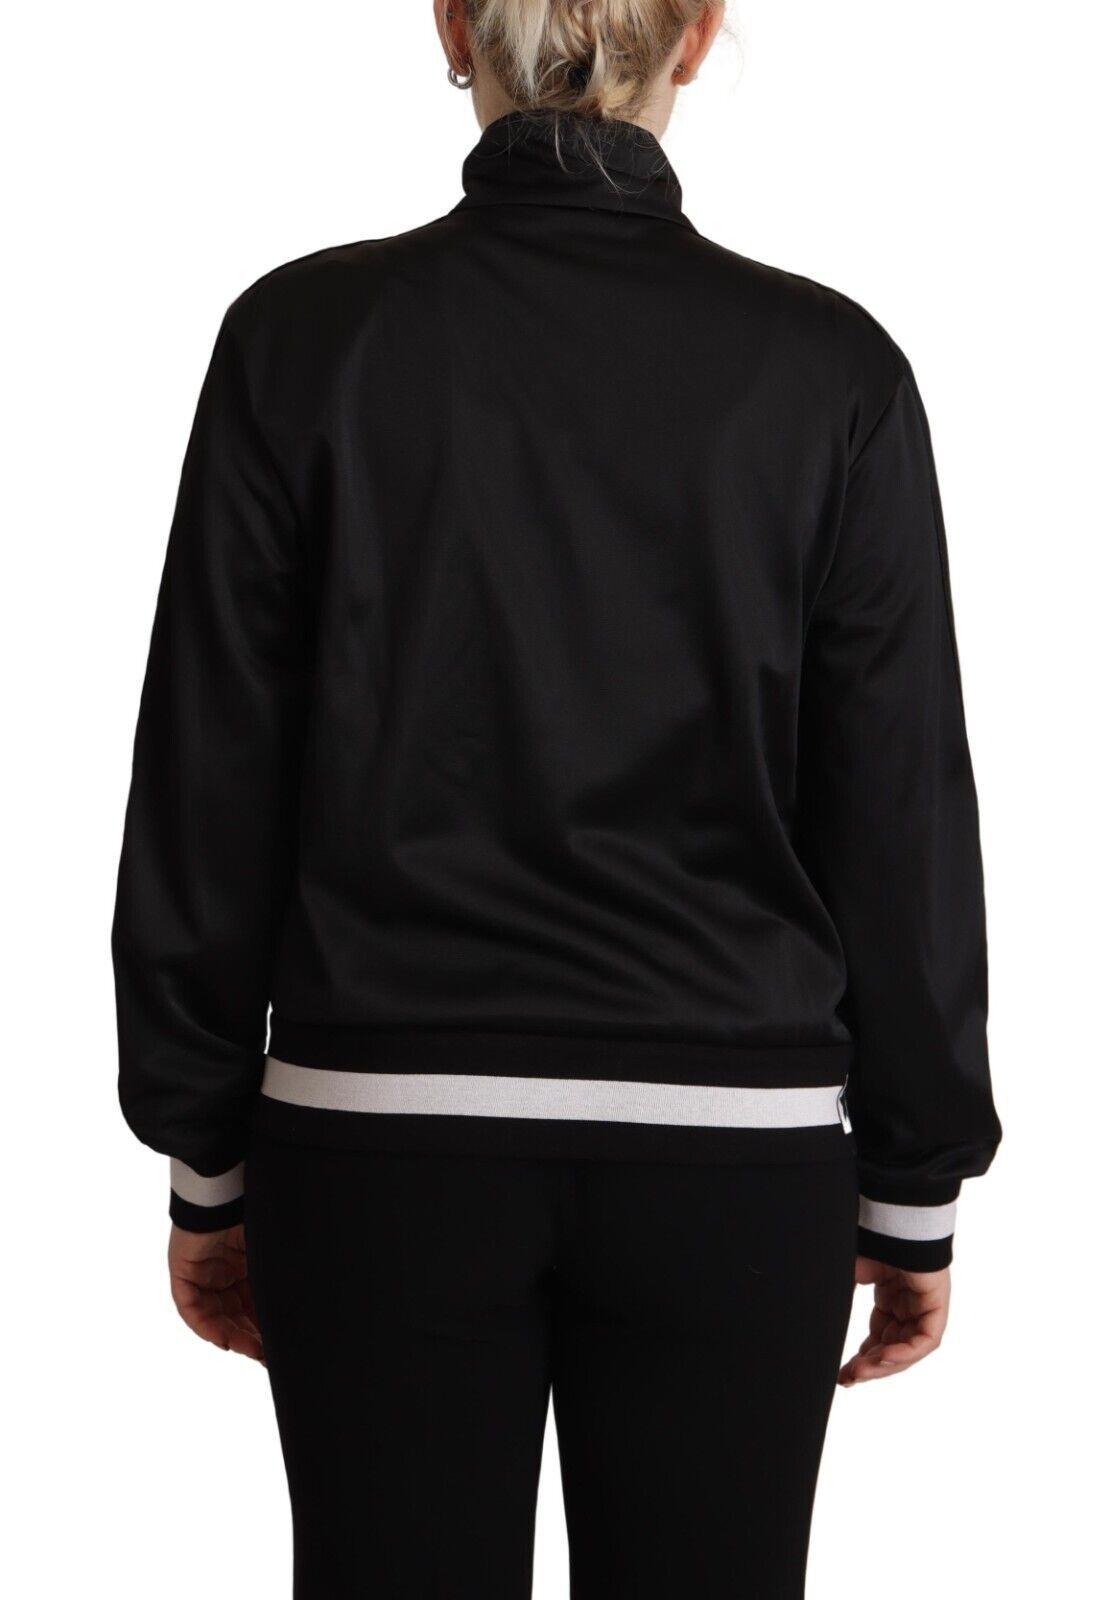 Elegant Zip-Up Bomber Sweater in Black & White